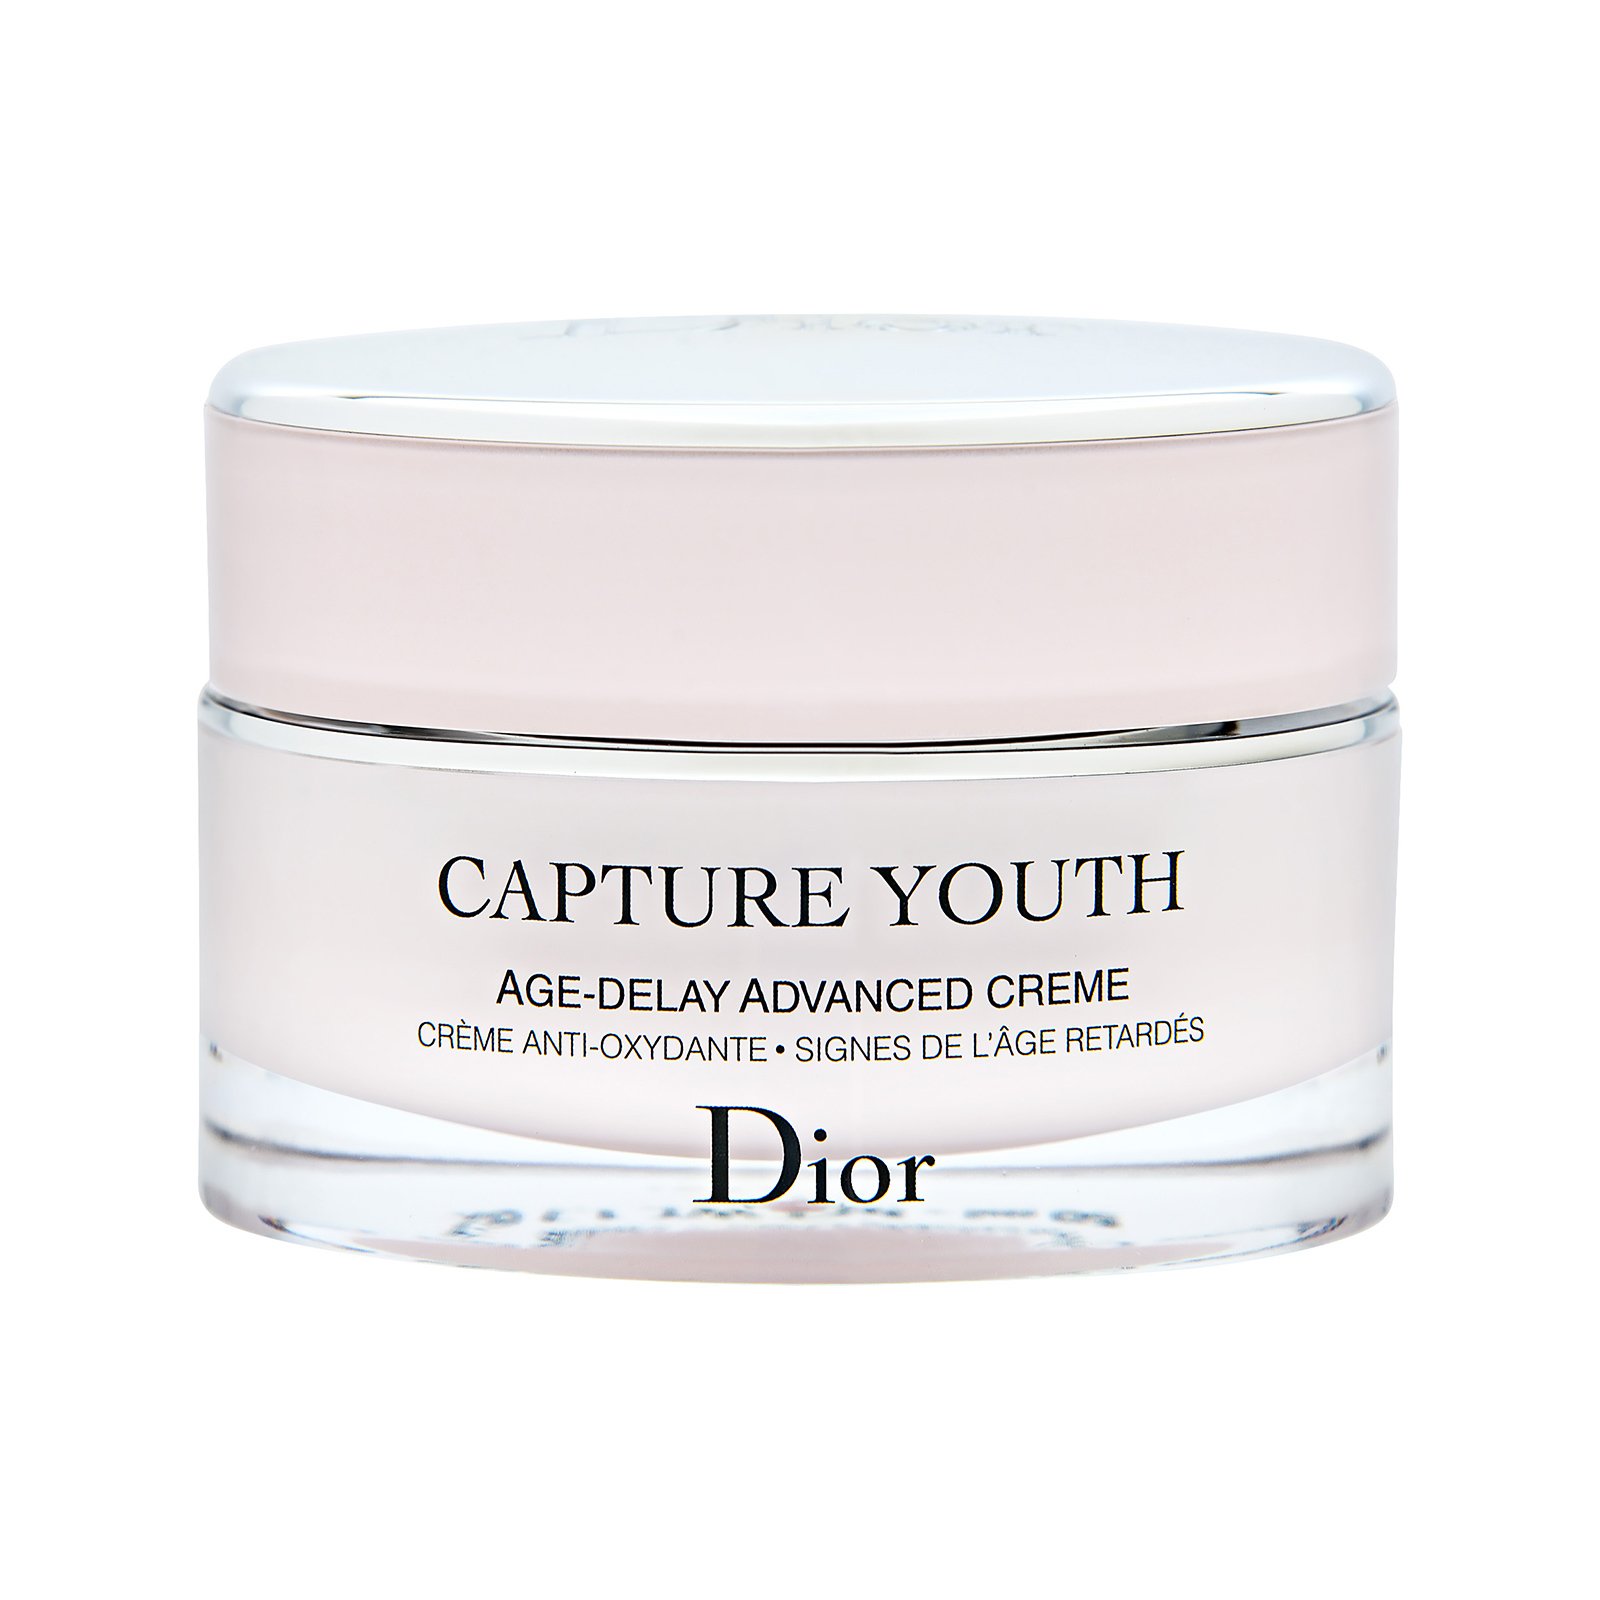 Capture Youth Age-Delay Advanced Crème